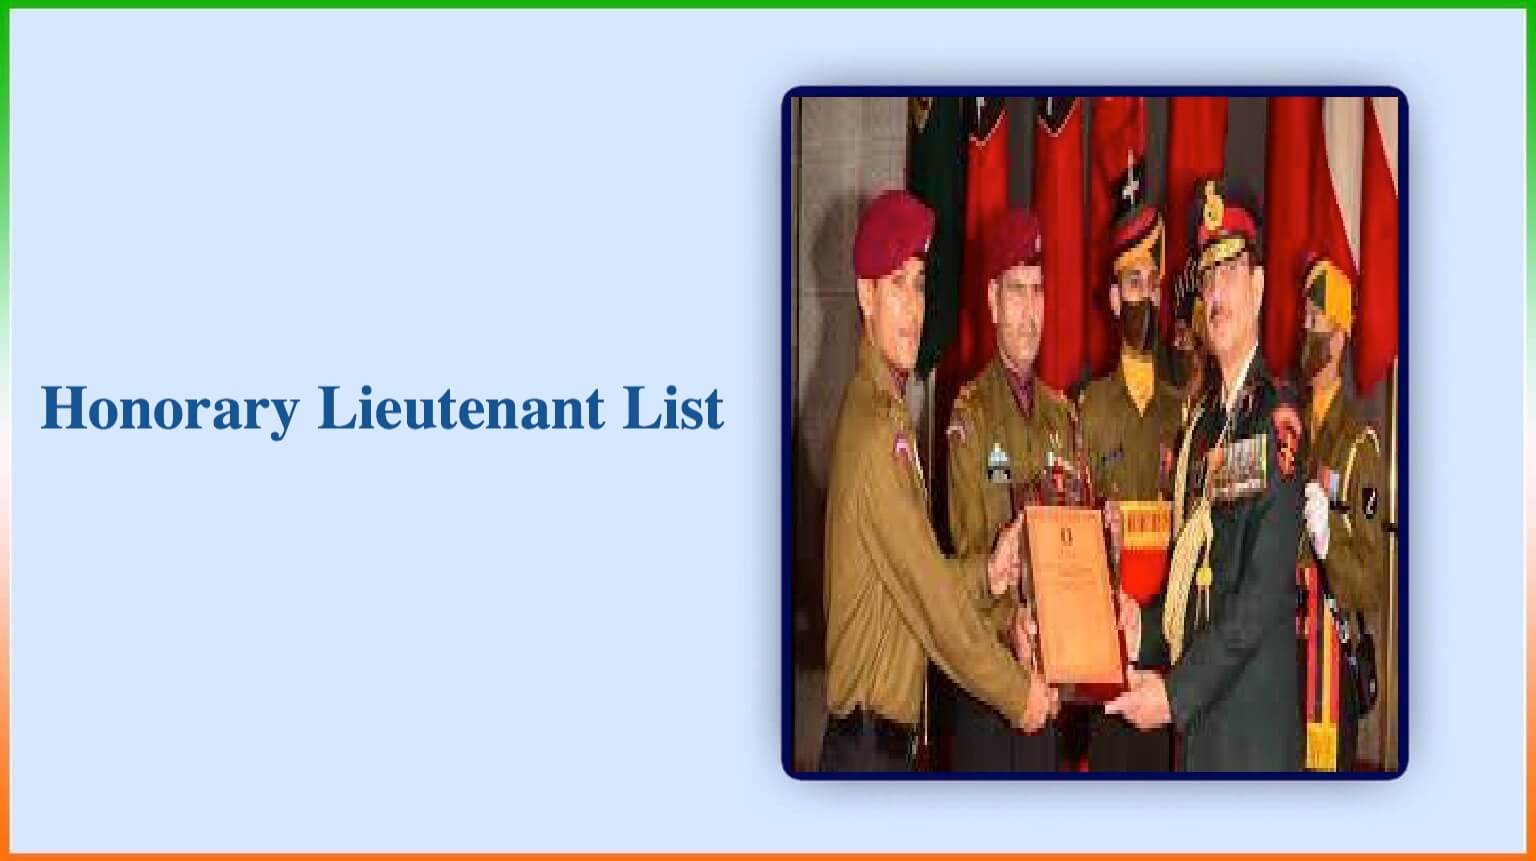 Honorary Lieutenant List